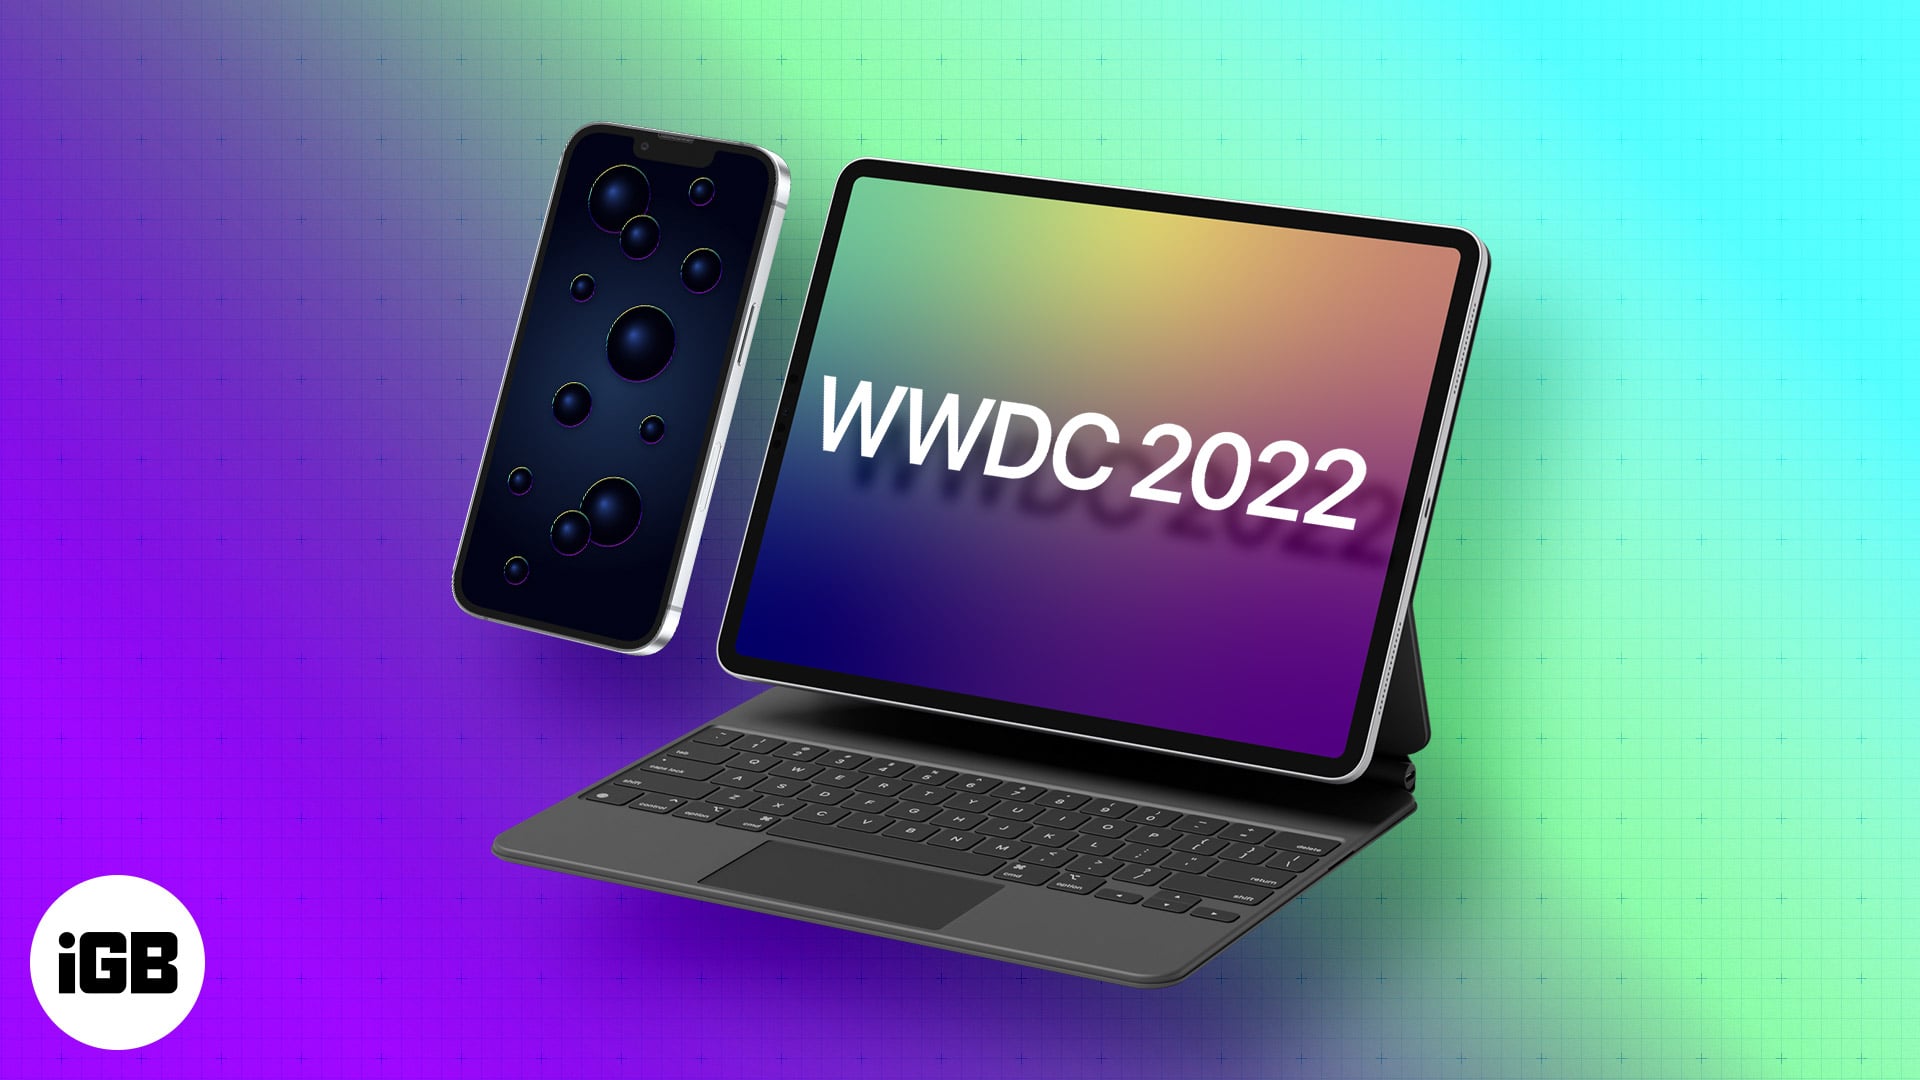 WWDC 2022 wallpaper download: Make the wait worth it - iGeeksBlog